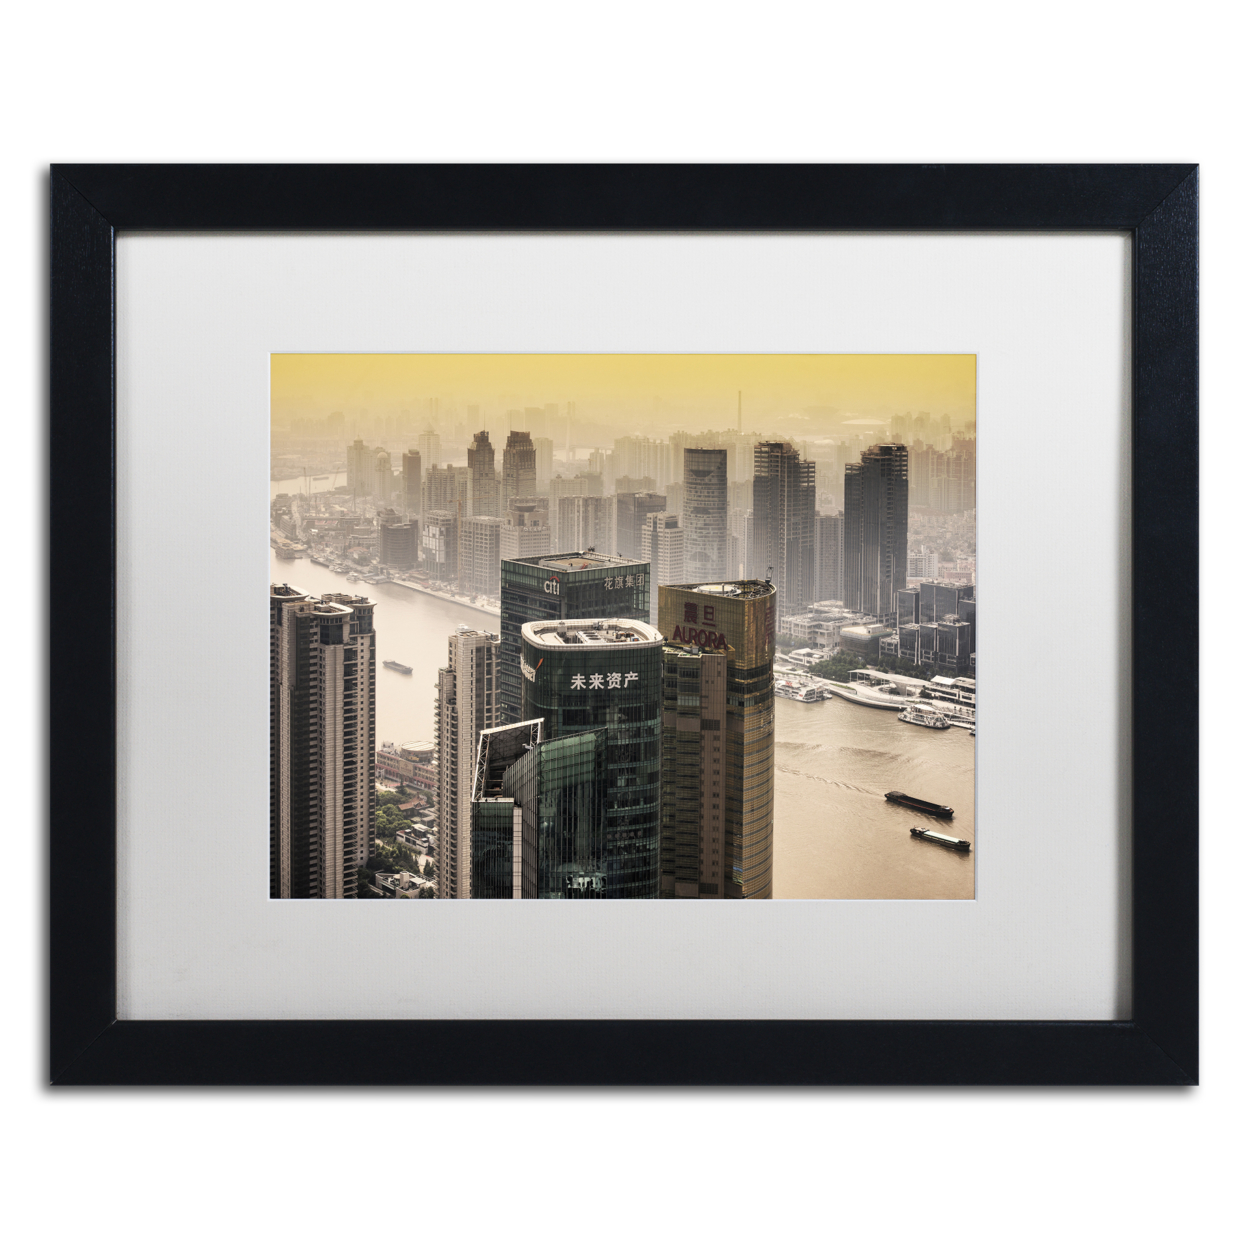 Philippe Hugonnard 'Shanghai River' Black Wooden Framed Art 18 X 22 Inches